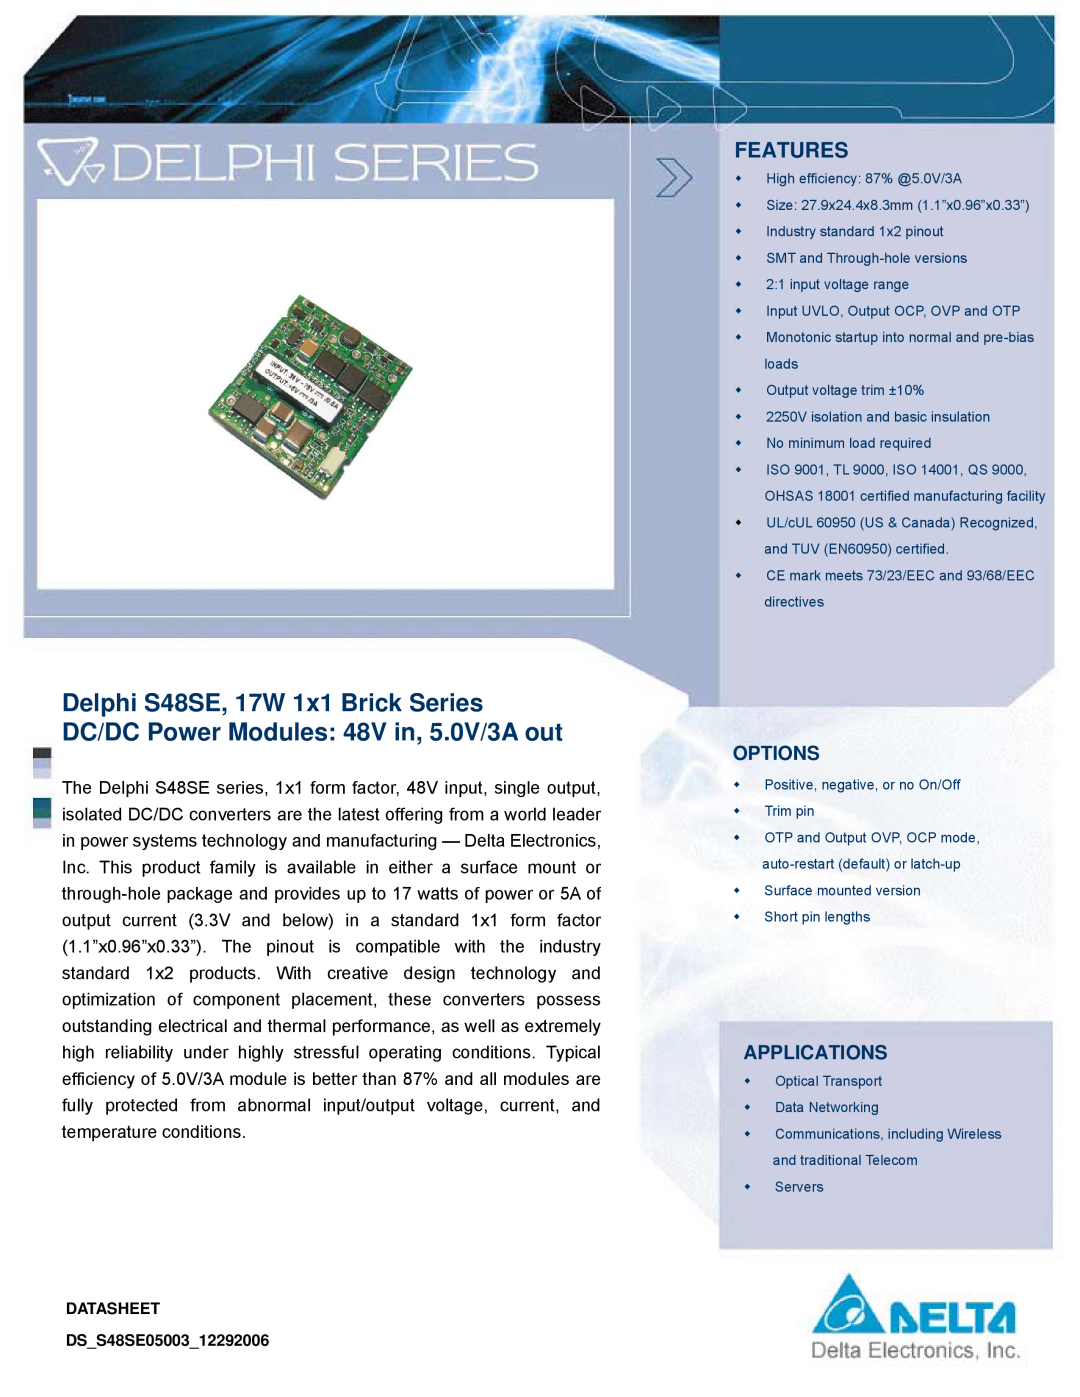 Delta Electronics S48SE manual Options, Applications, Features 